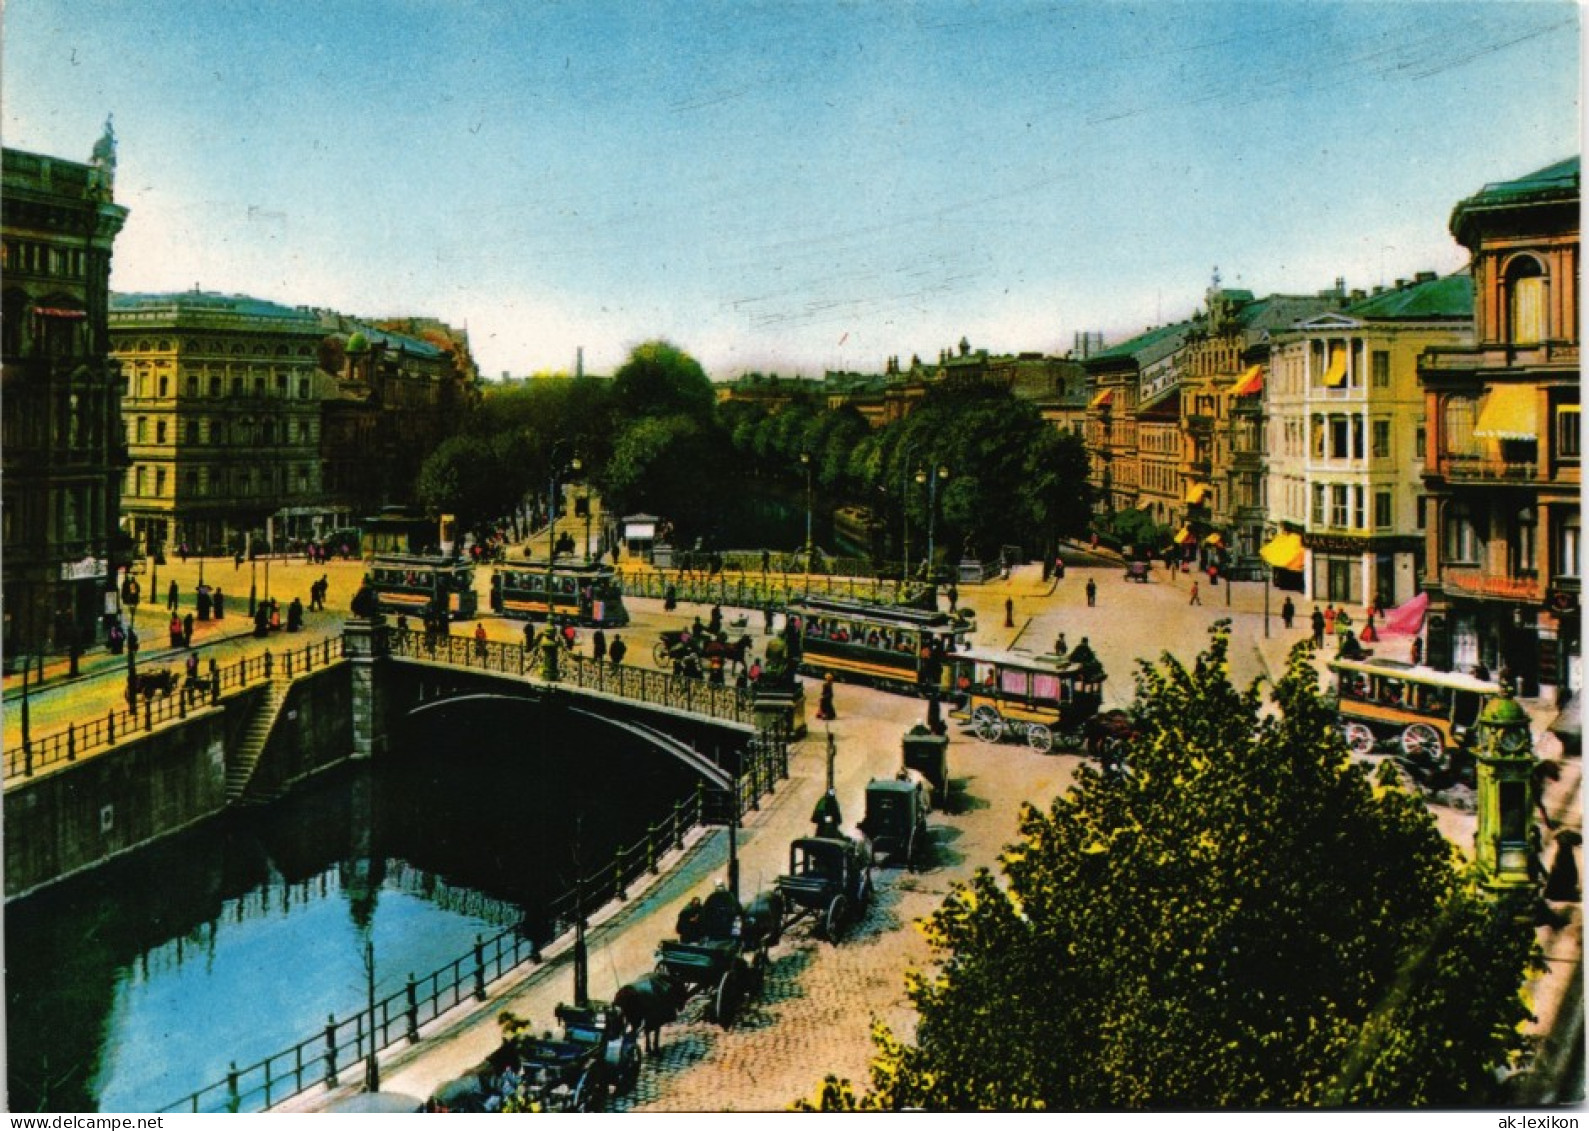 Ansichtskarte Tiergarten-Berlin Potsdamer Brücke - REPRO 1913/1995 - Tiergarten